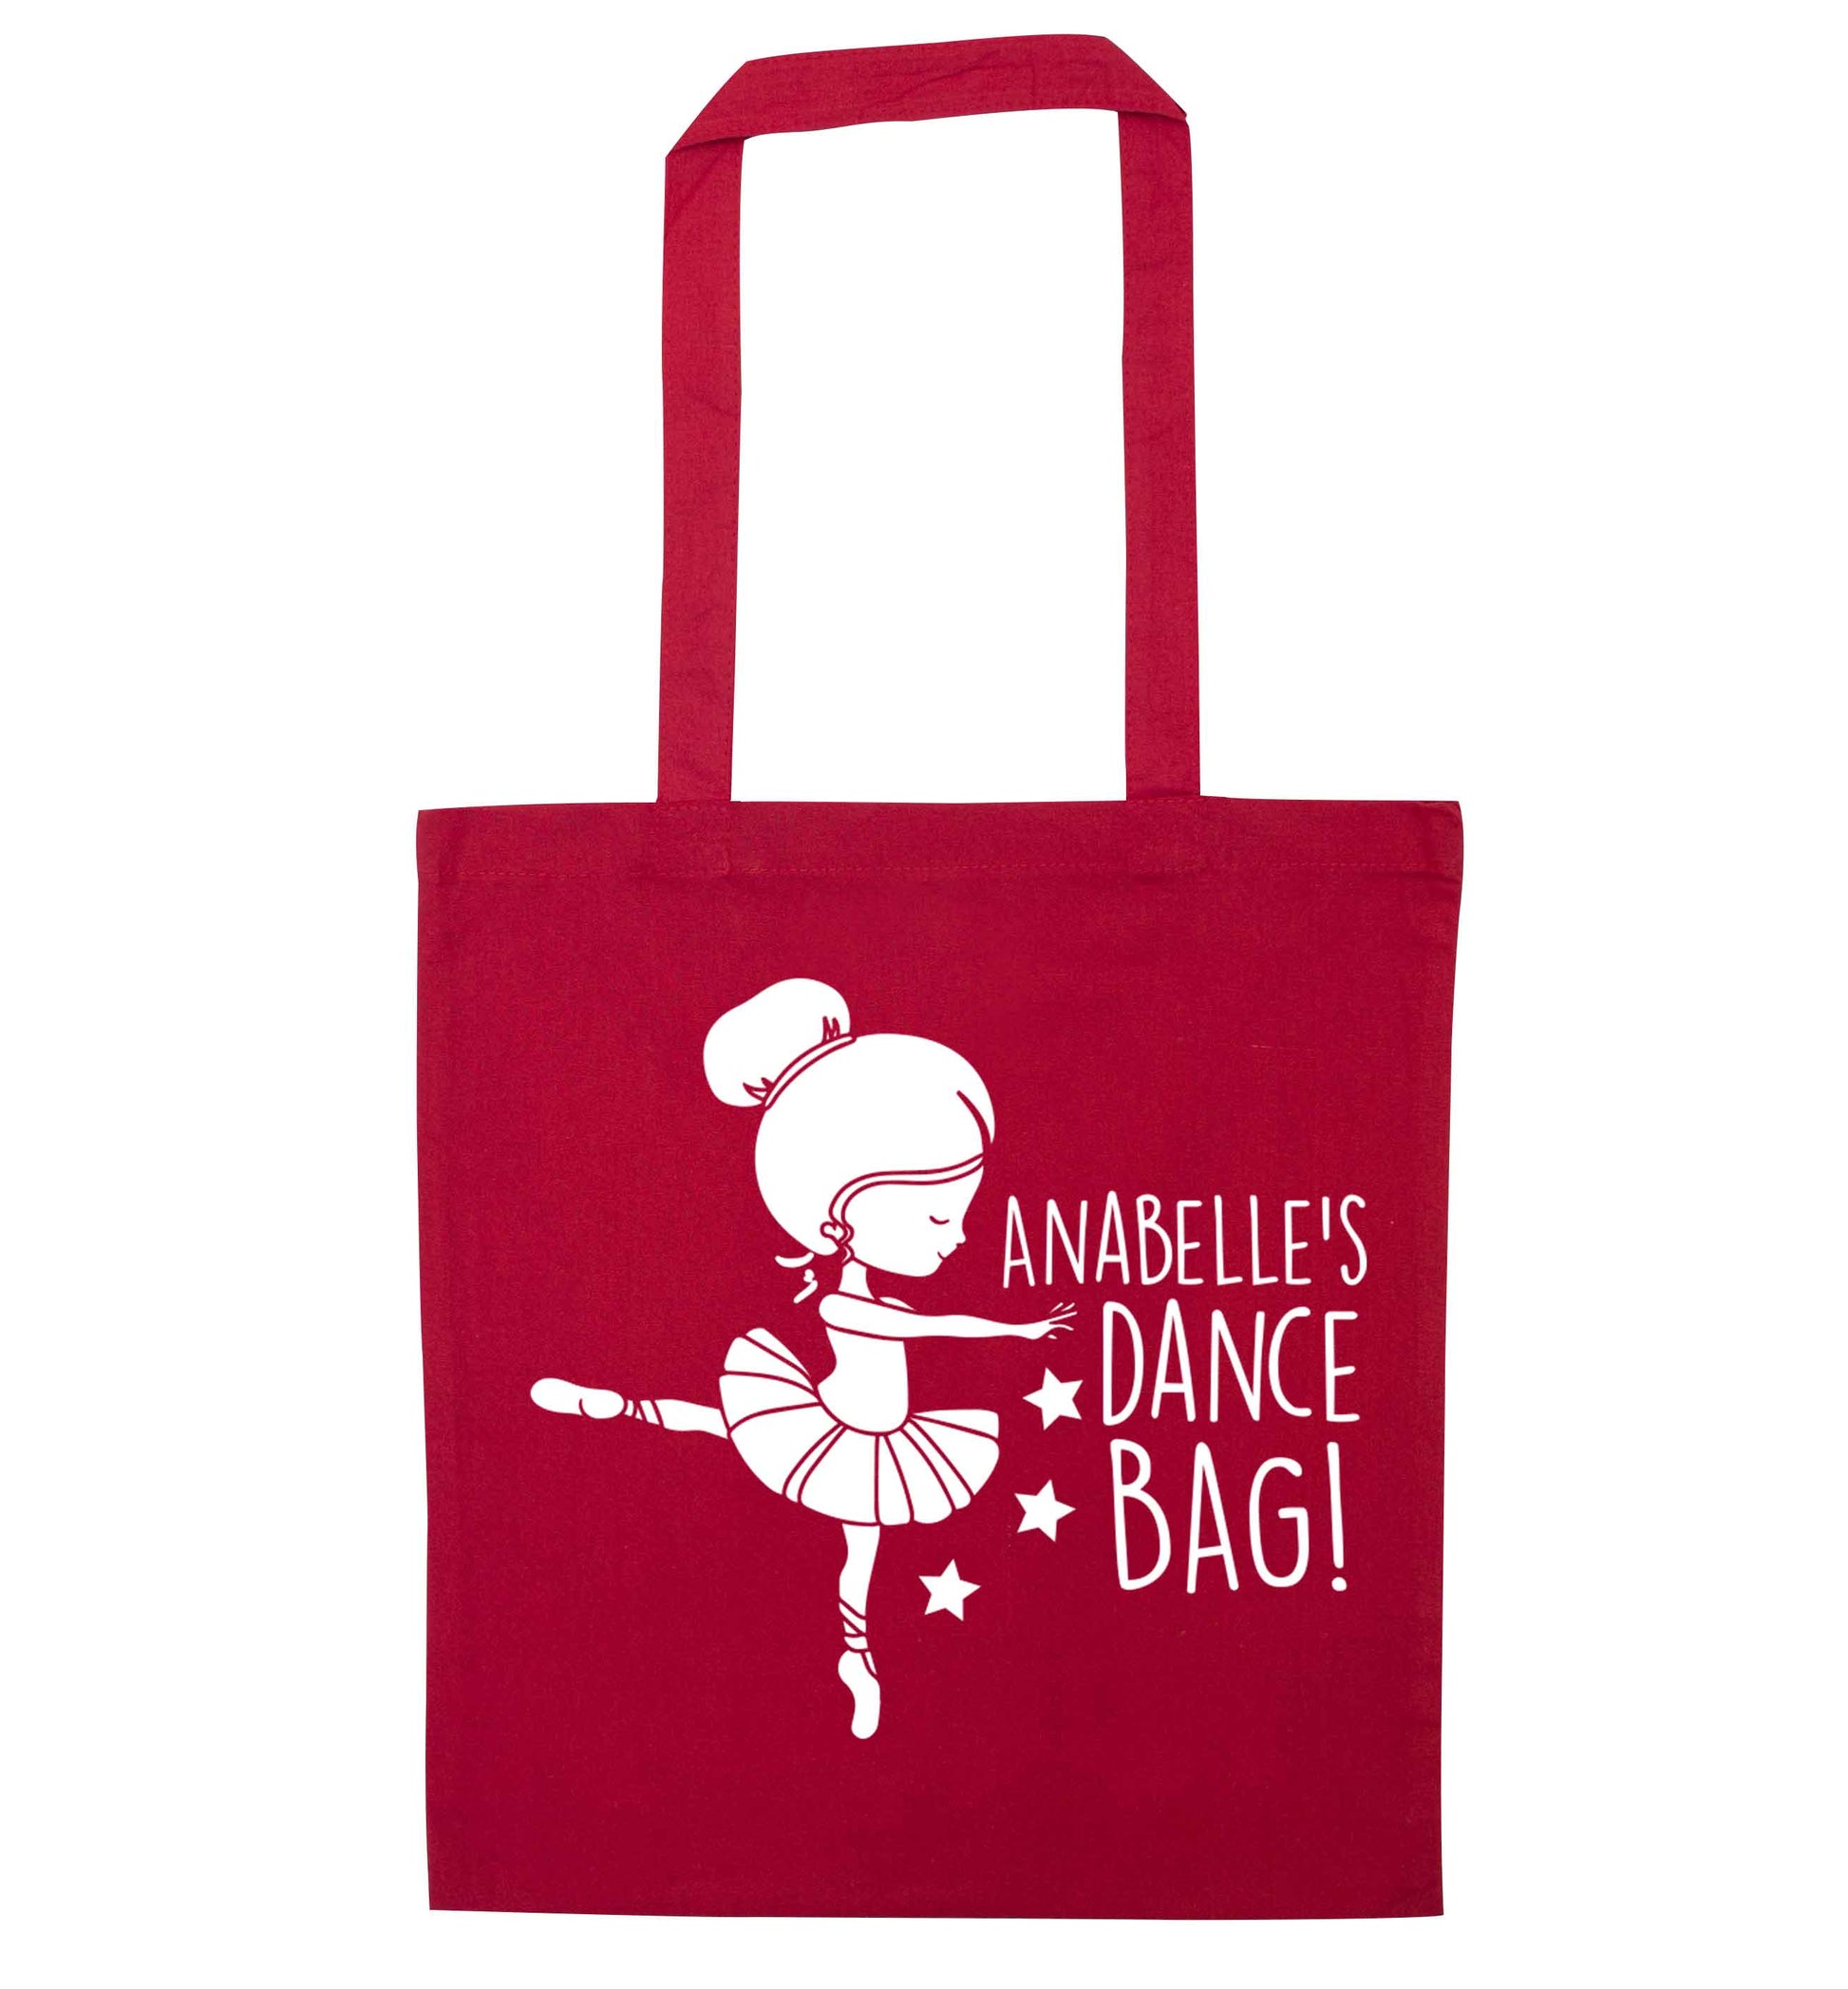 Personalised Ballet Dance Bag red tote bag